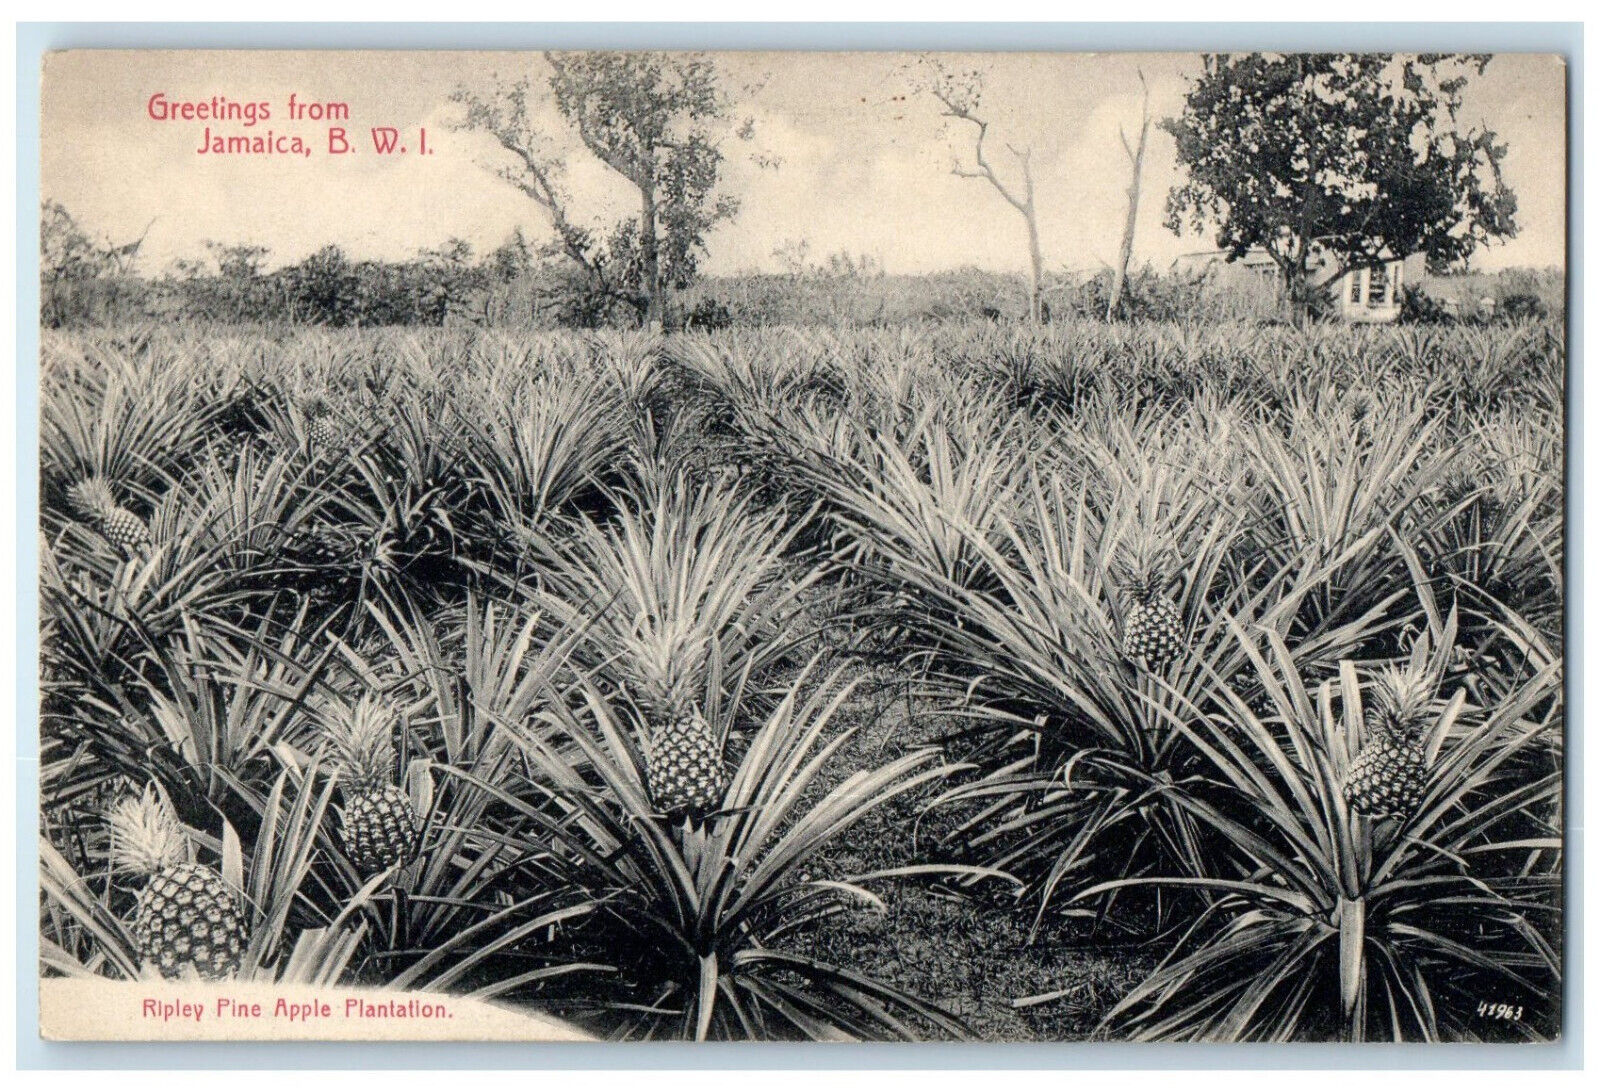 c1910 Pineapple Plantation Ripley Pine Greetings from Jamaica BWI Postcard